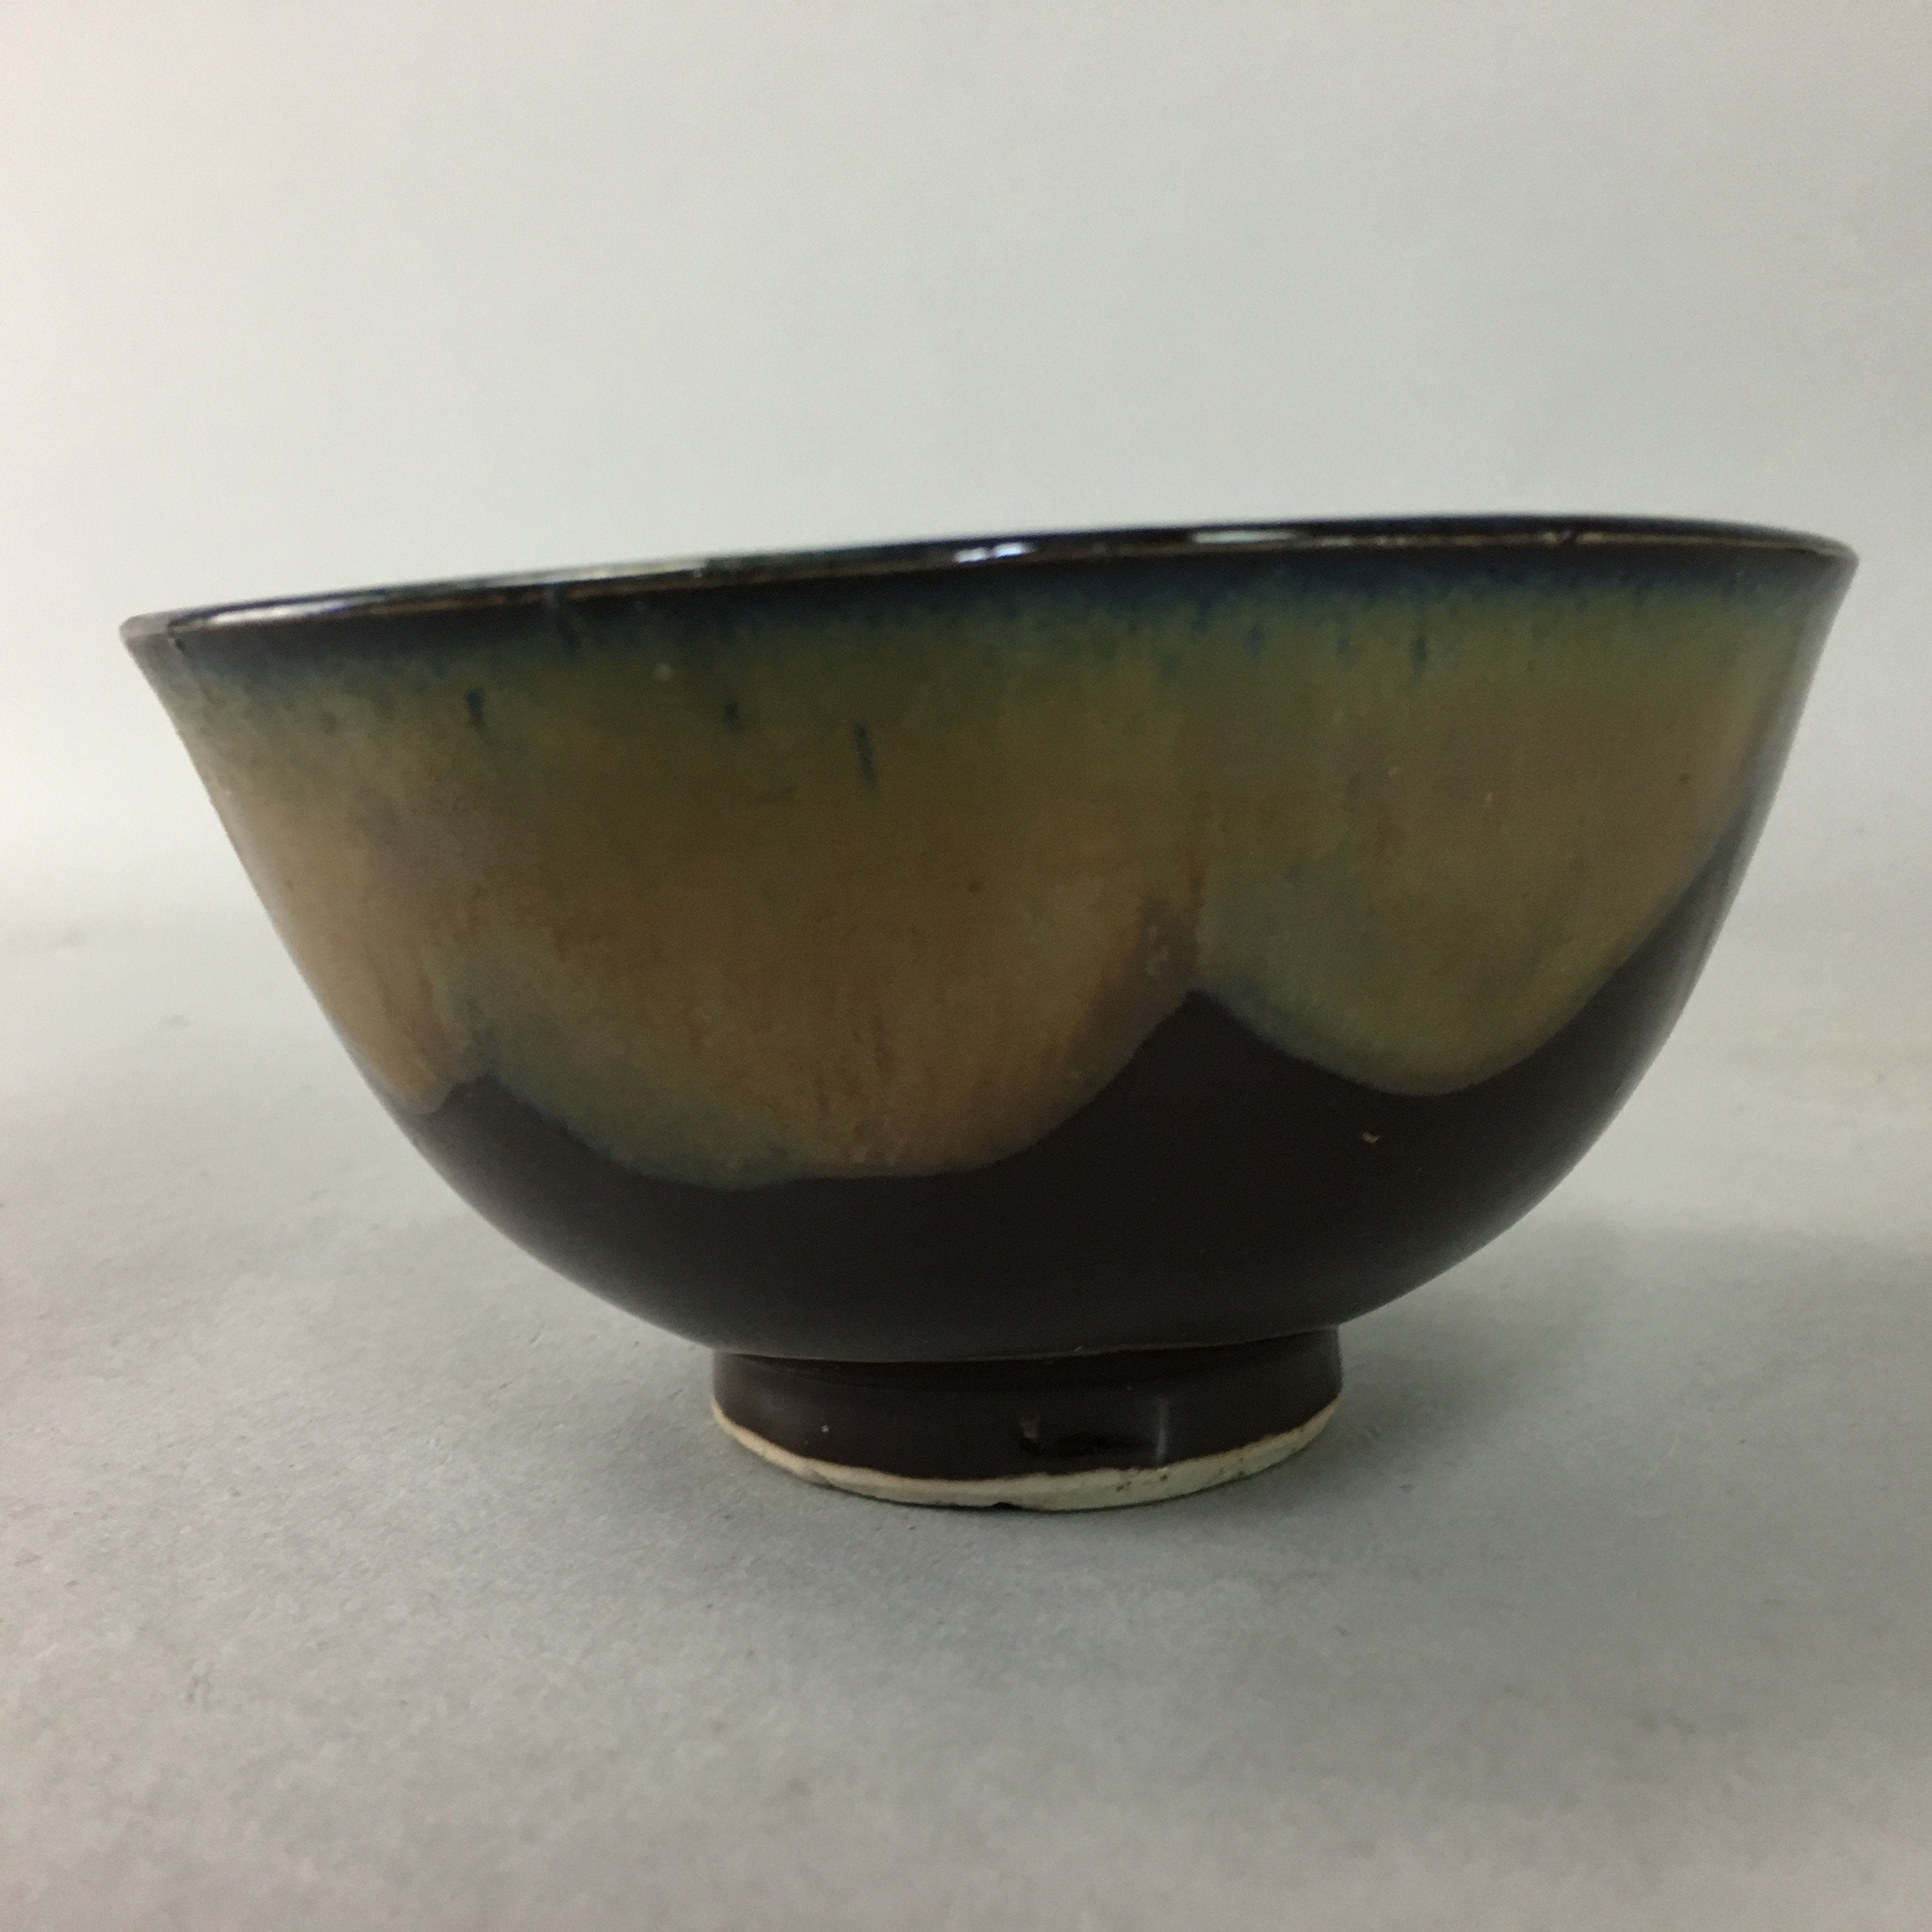 Japanese Porcelain Rice Bowl Vtg Brown Chawan Shiny Smooth Flowing PT775